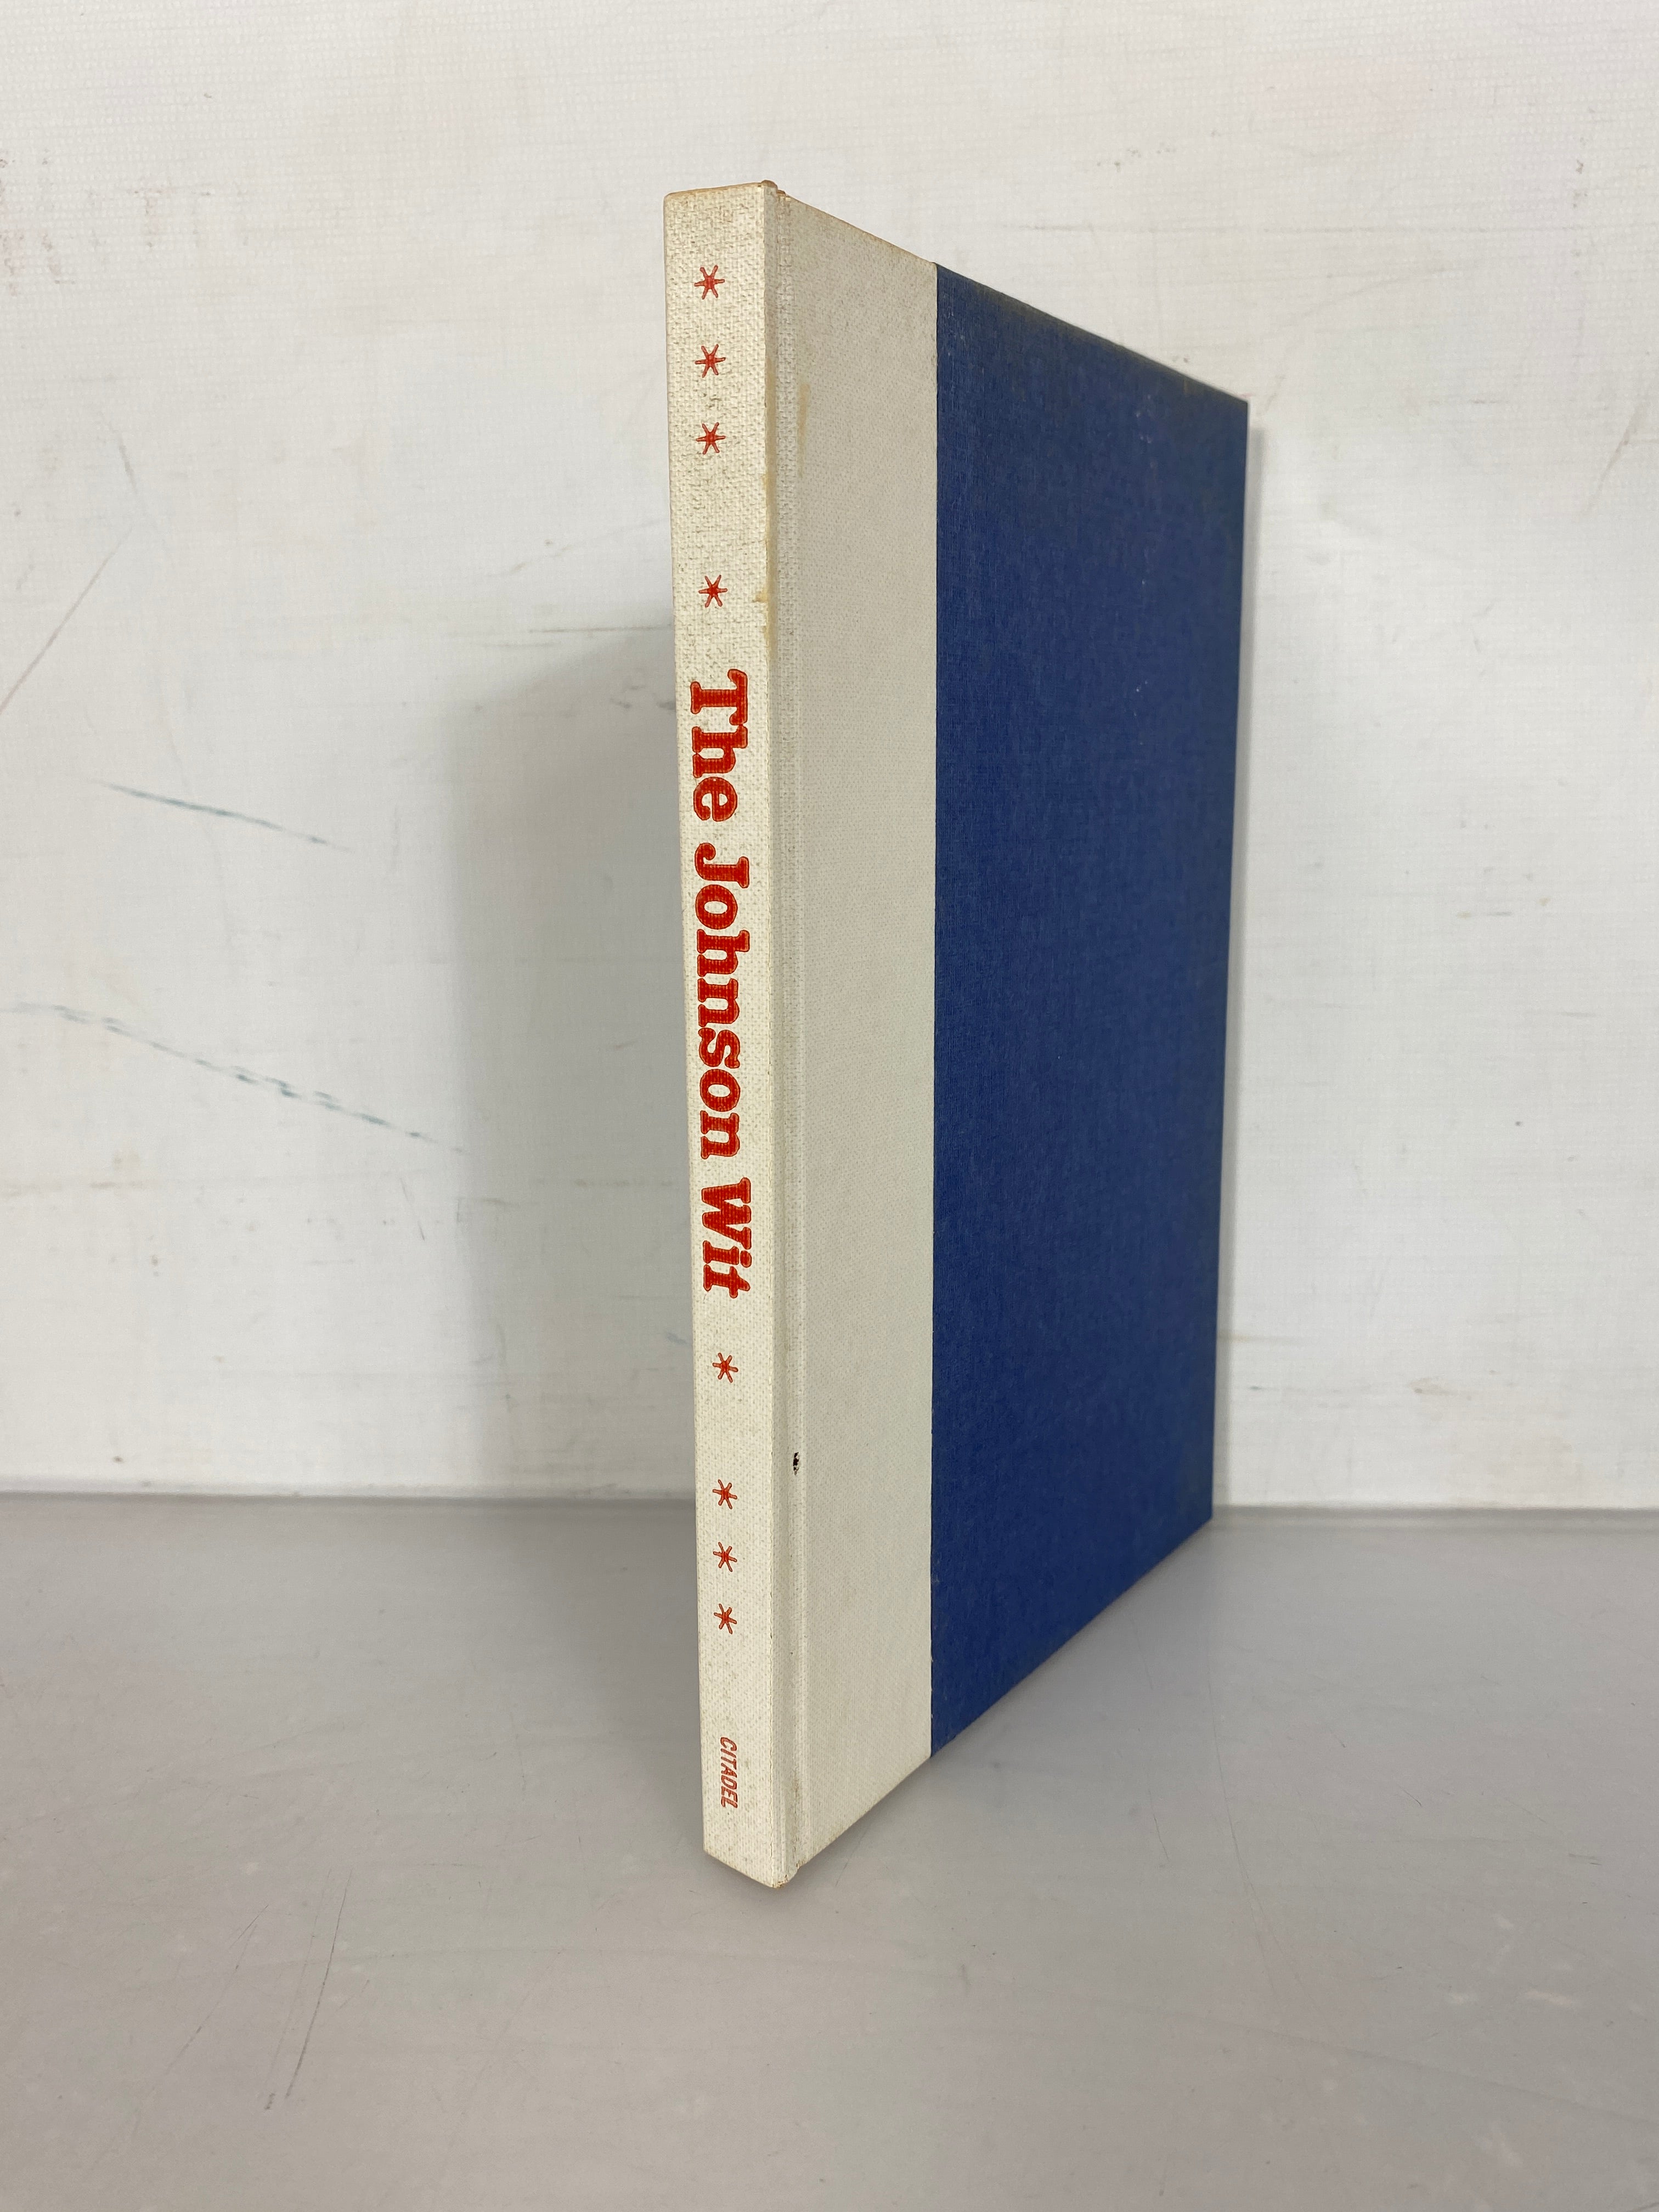 The Johnson Wit by Frances Spatz Leighton First Edition 1965 HC DJ